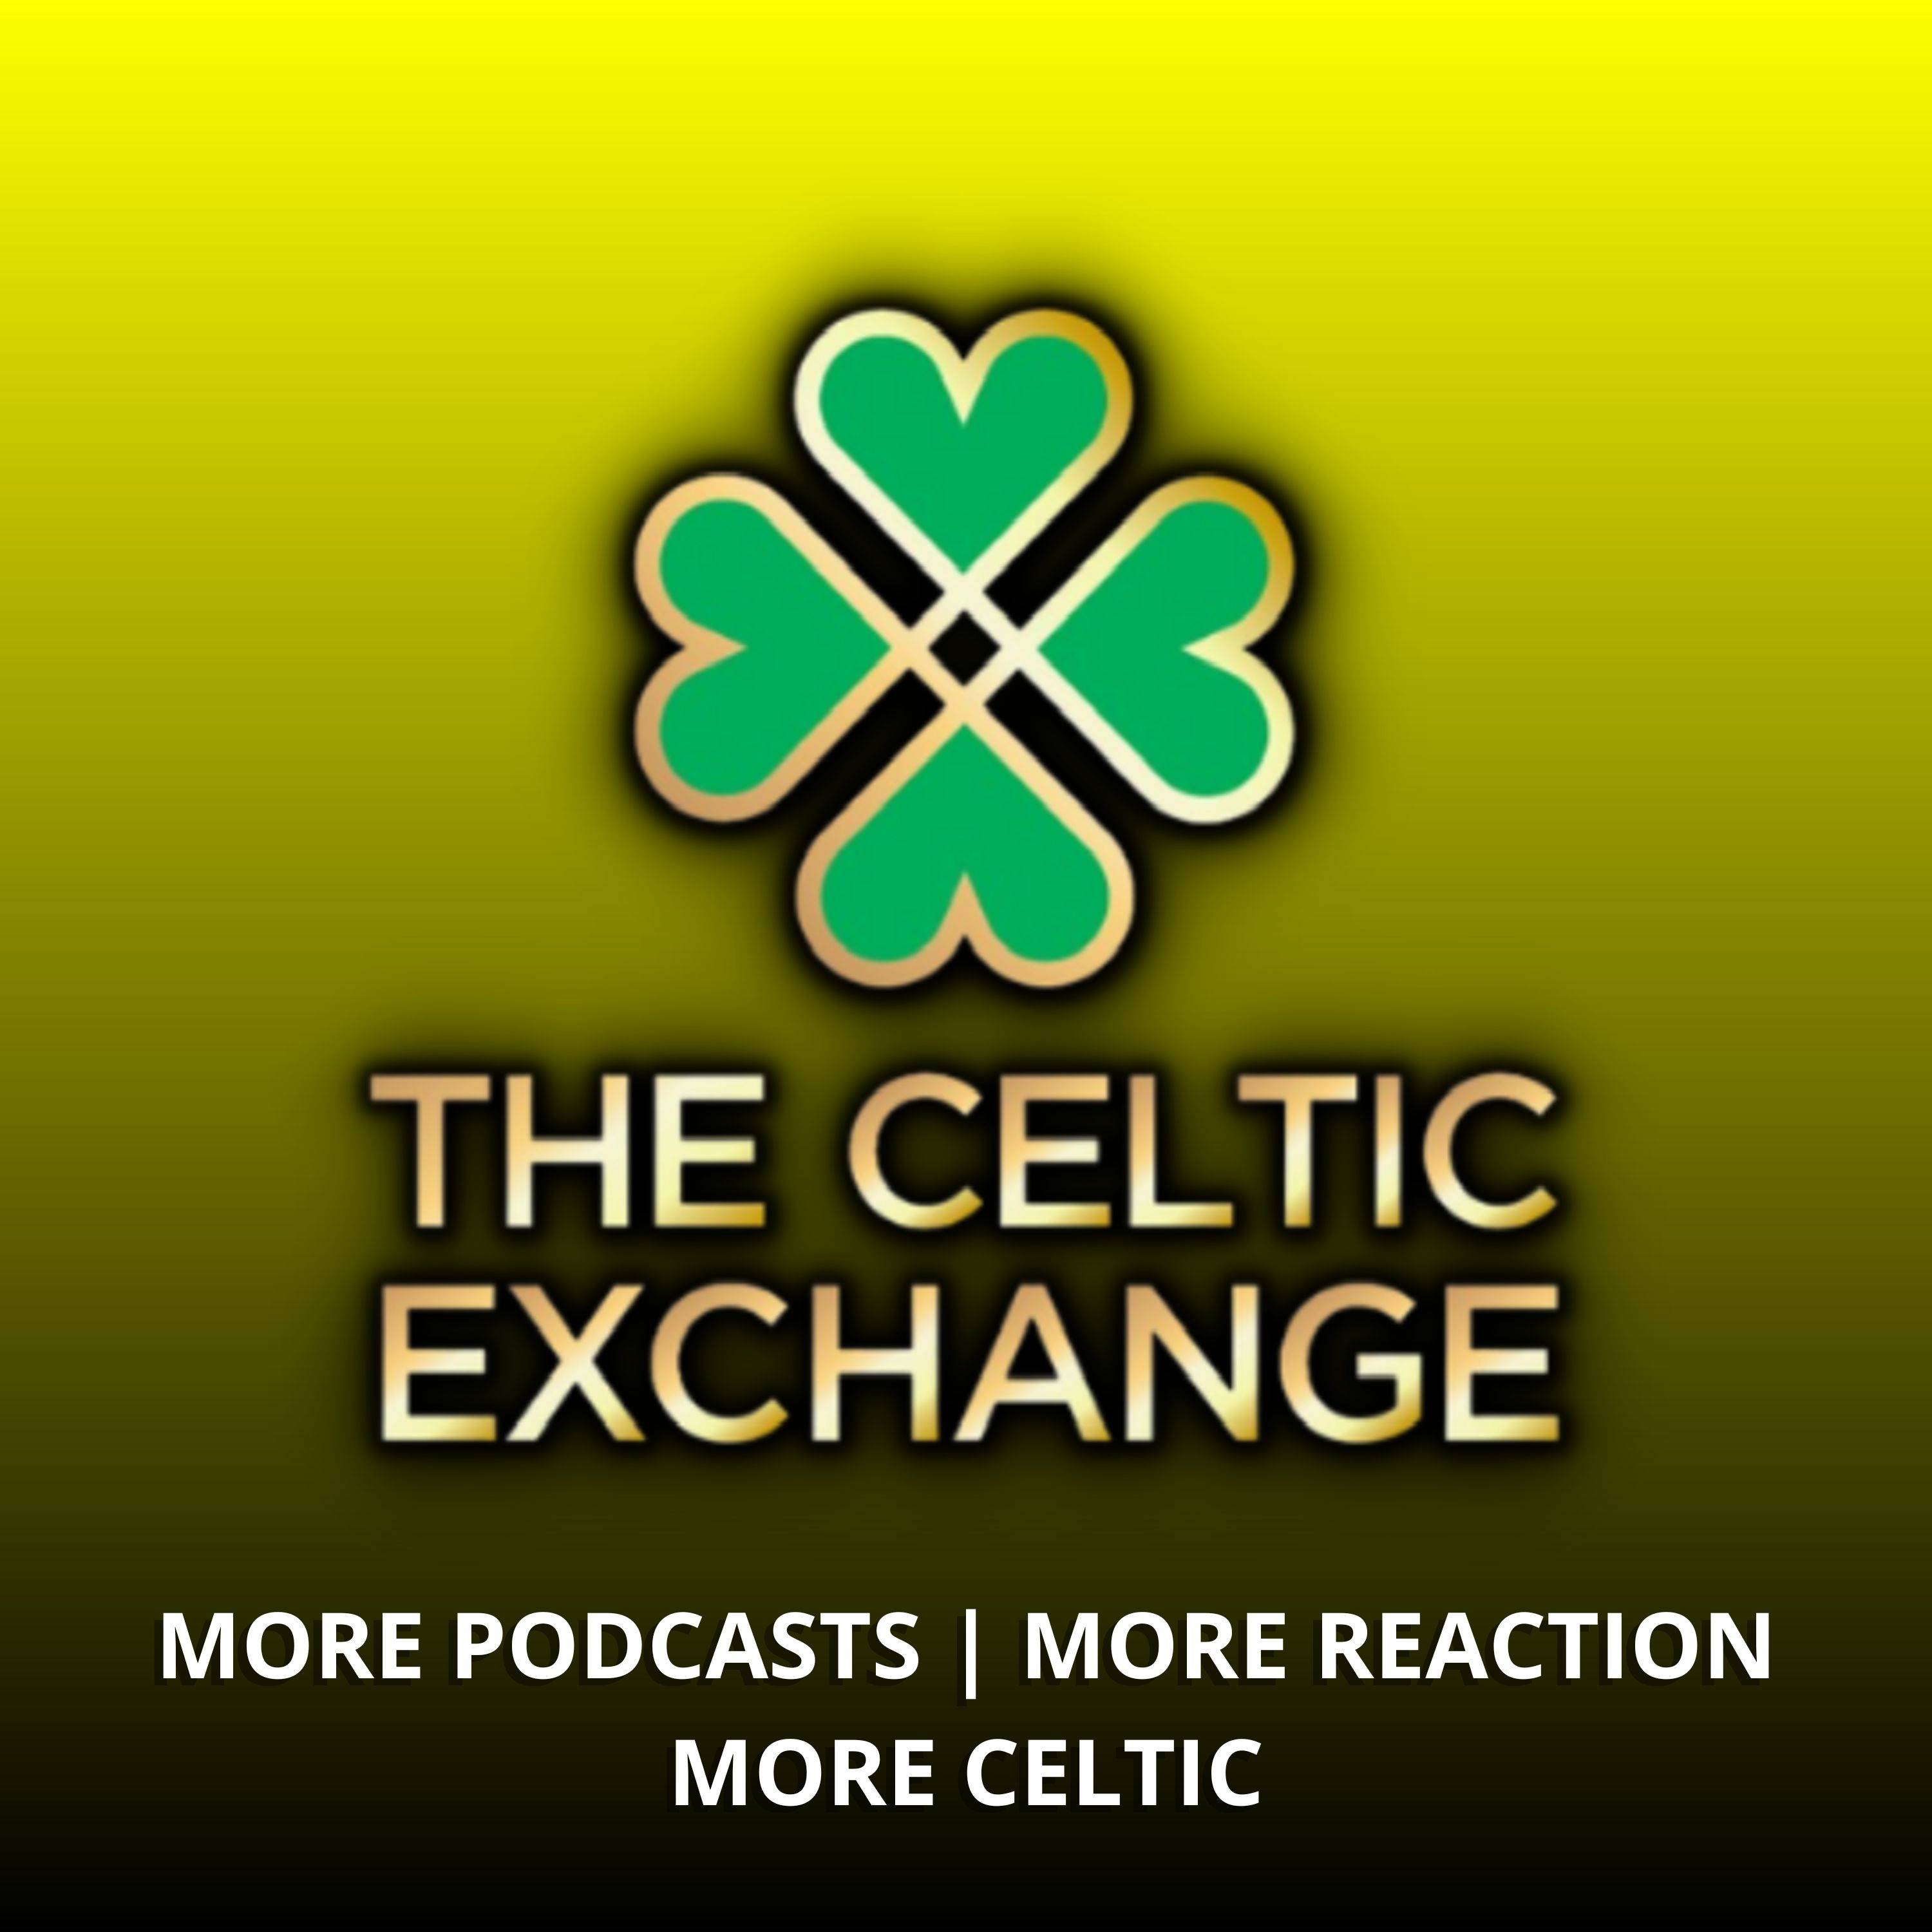 Making Sense Of Celtic’s January Transfer Window | With Anthony Joseph, Sky Sports News